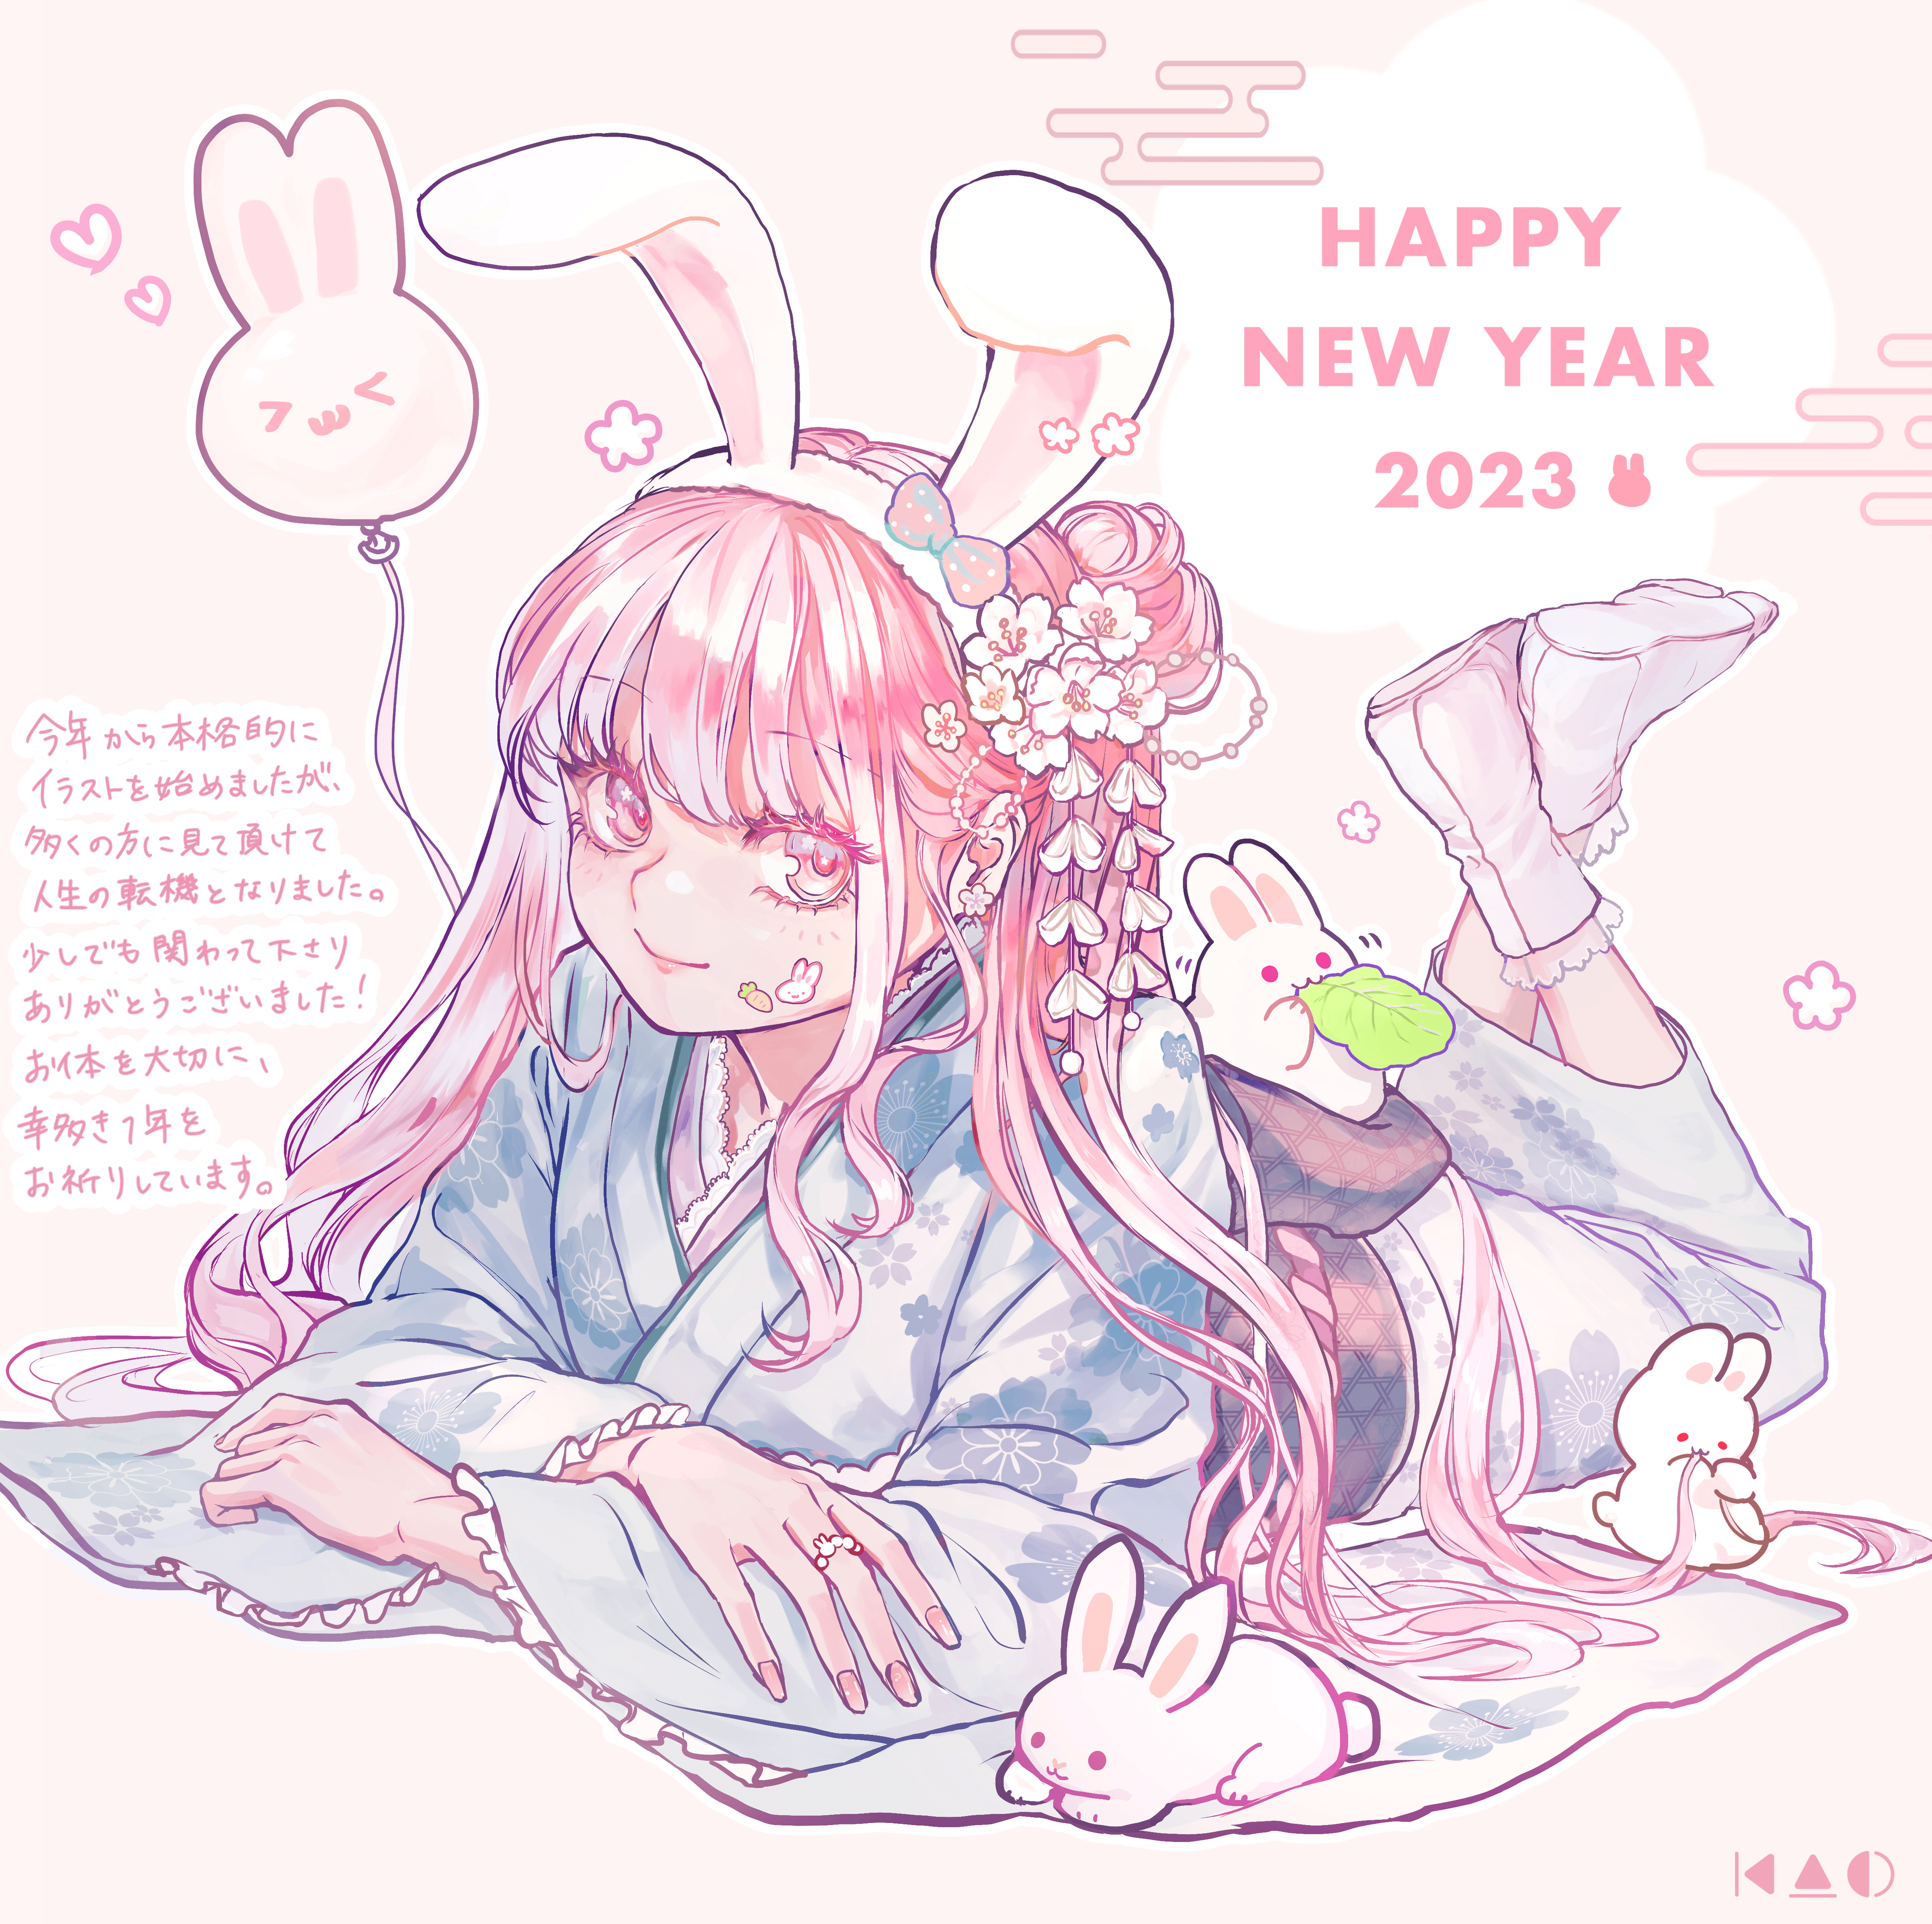 HAPPY NEW YEAR! 2023